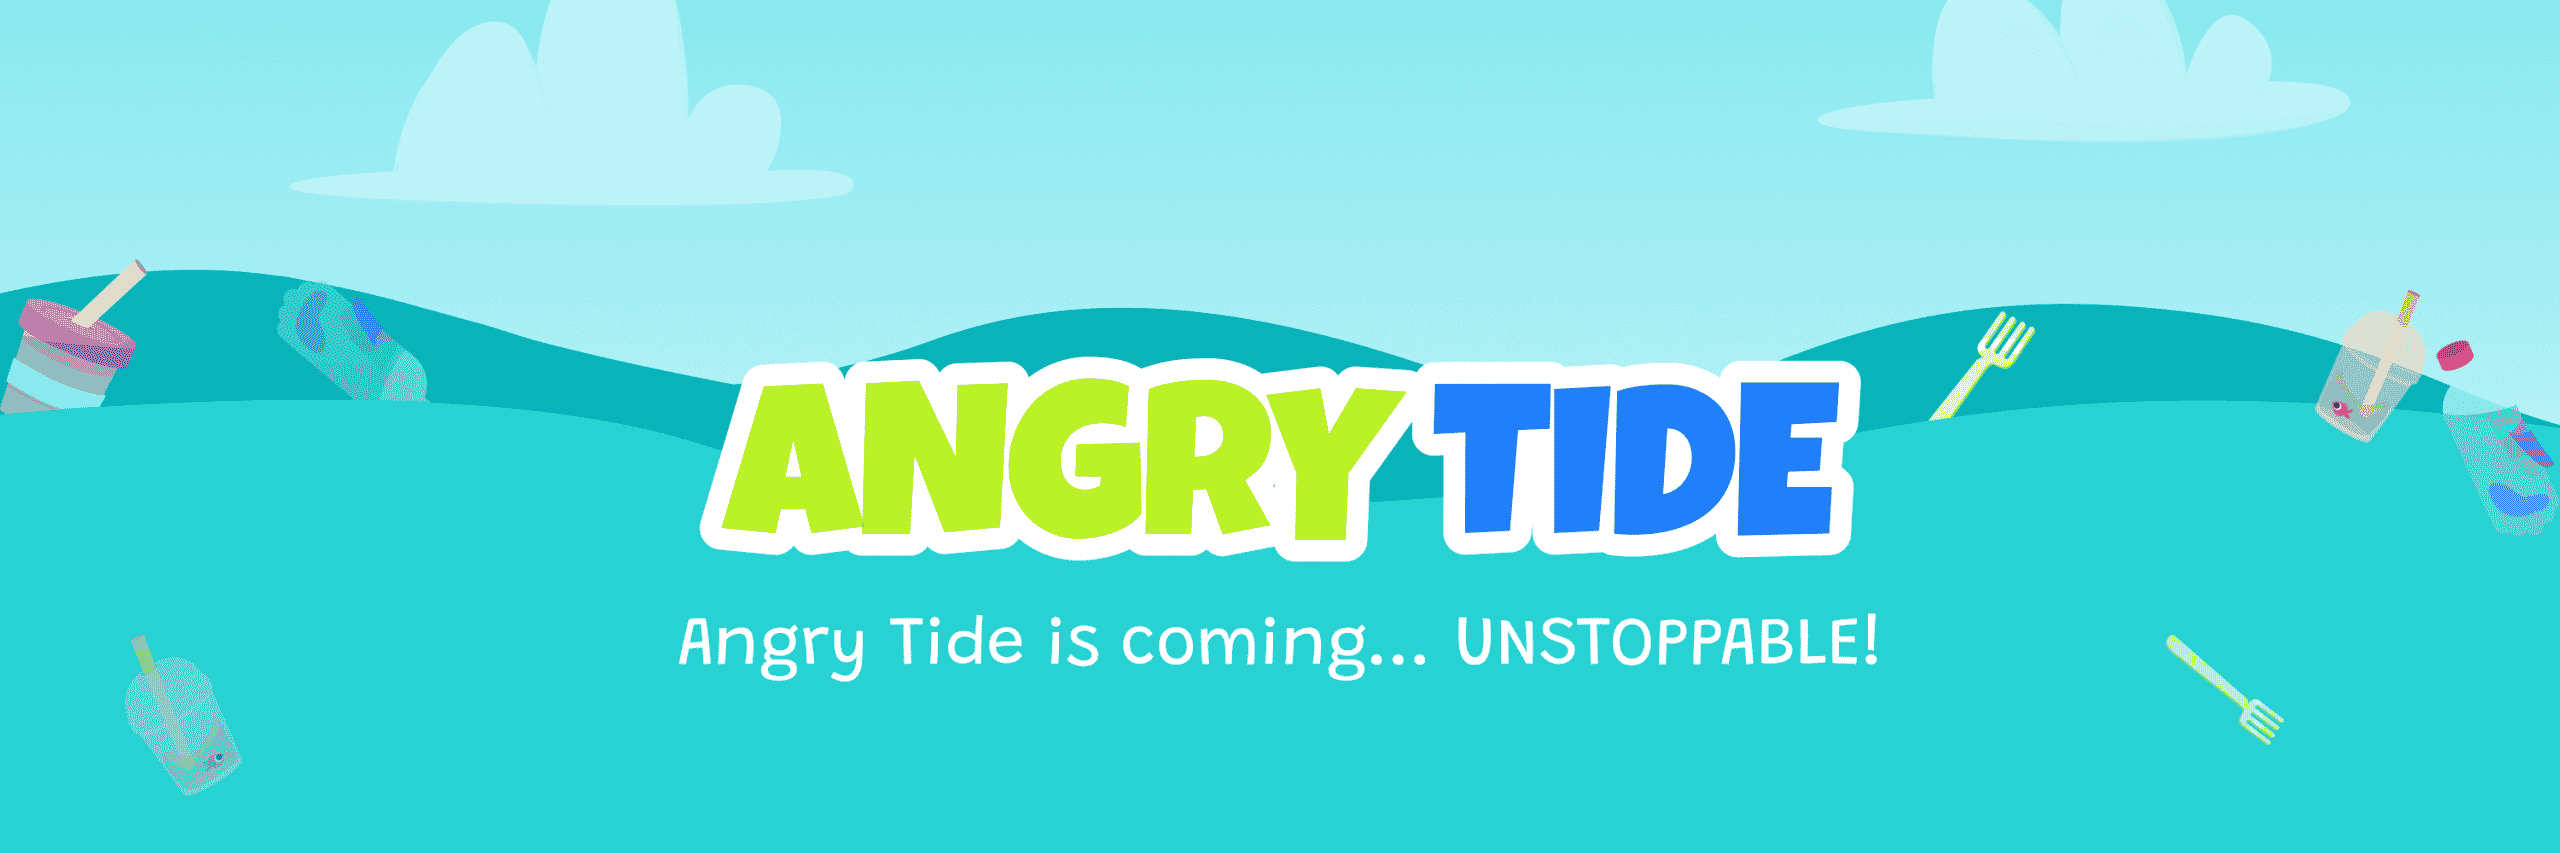 Póster digital del logo de la colección Angry Tides NFT